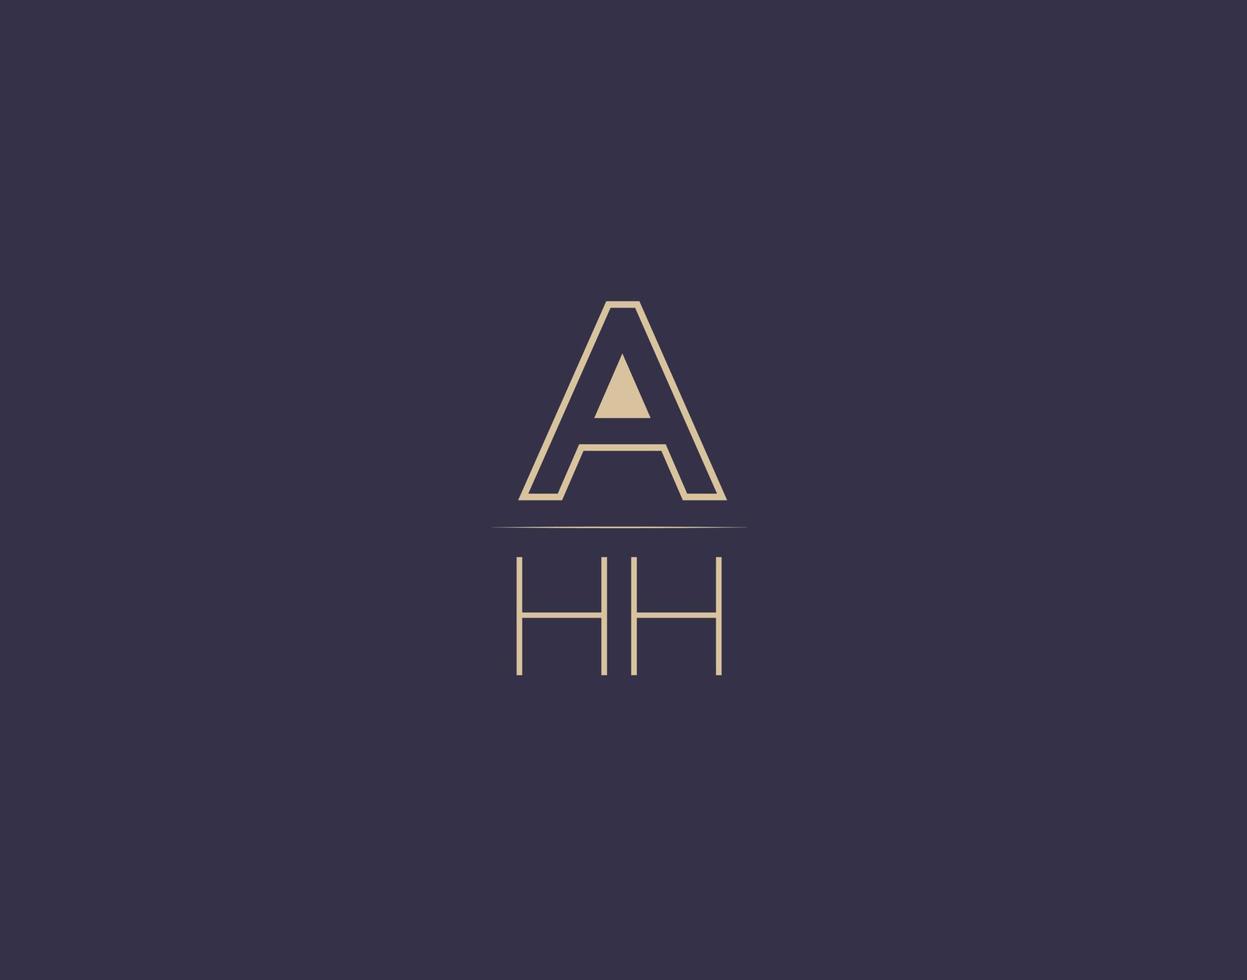 AHH letter logo design modern minimalist vector images